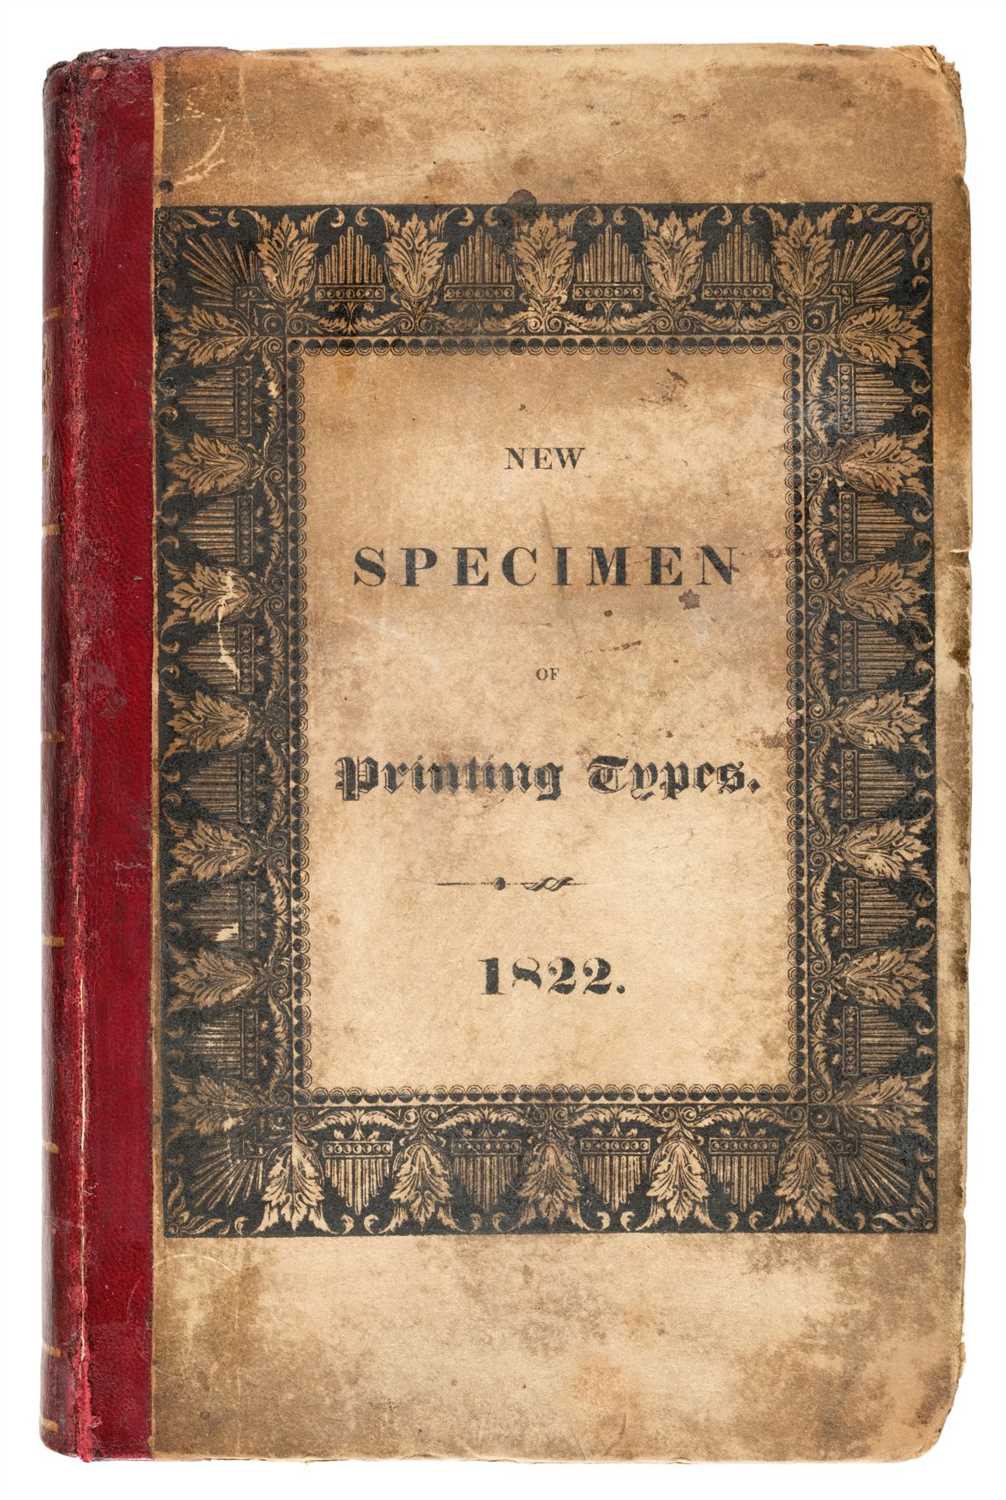 Lot 359 - Type Specimen. Specimen of Printing Types by Caslon & Livermore, [1822?]